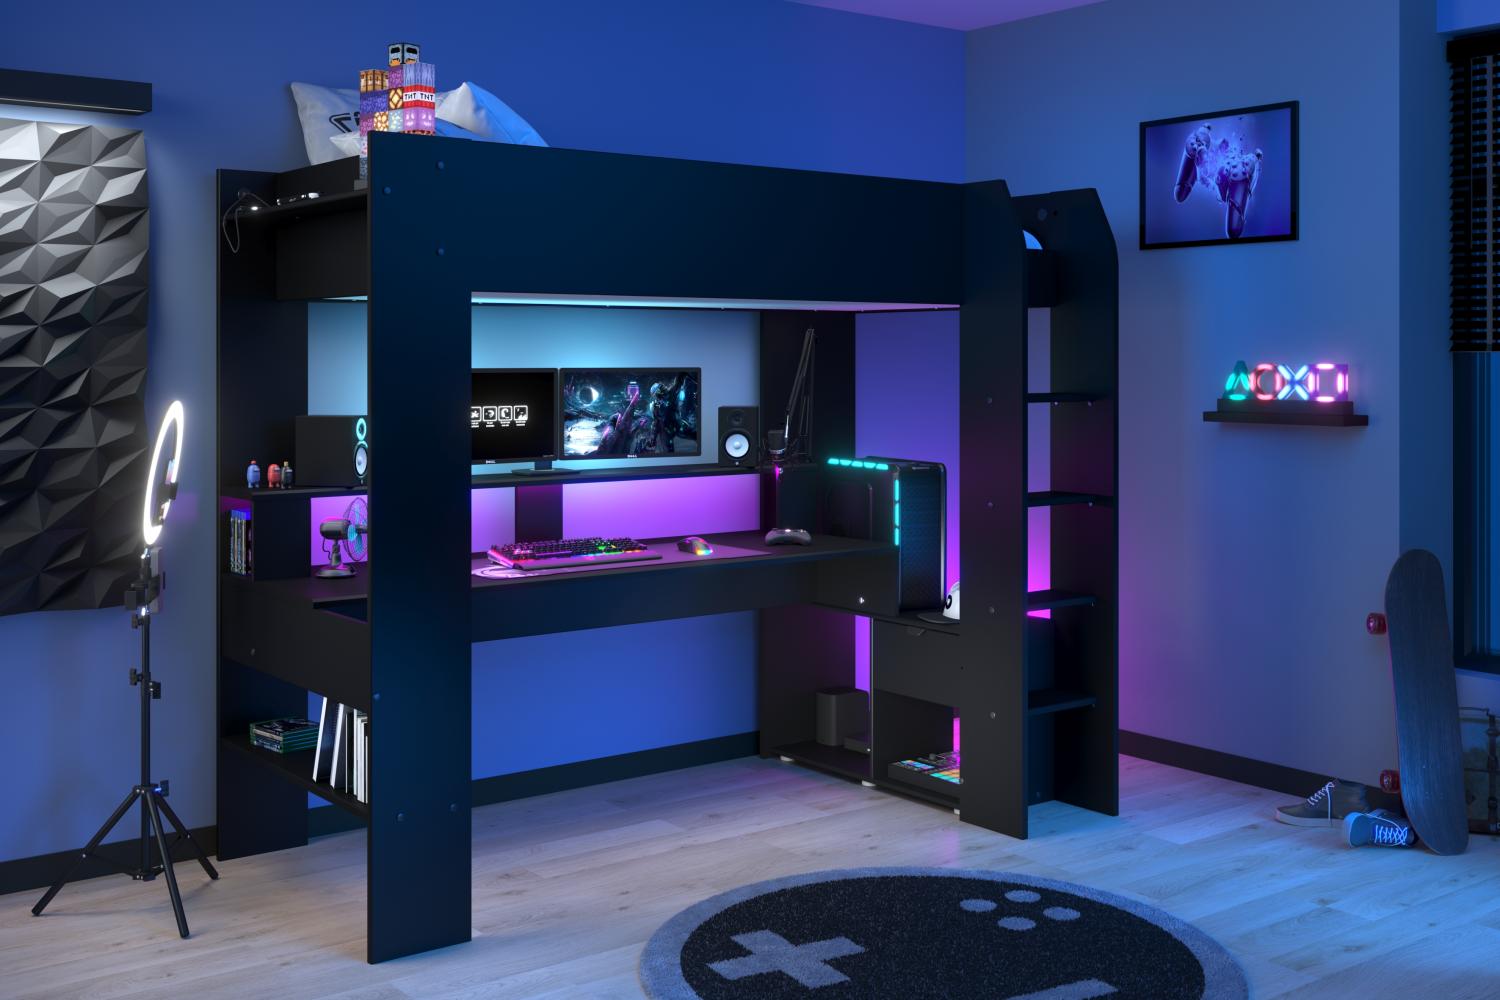 PARISOT Hochbett Gaming "Online 1" Weiß mit Gamingtisch Jugendbett Bett LED-Beleuchtung Farbwechsel Bild 1